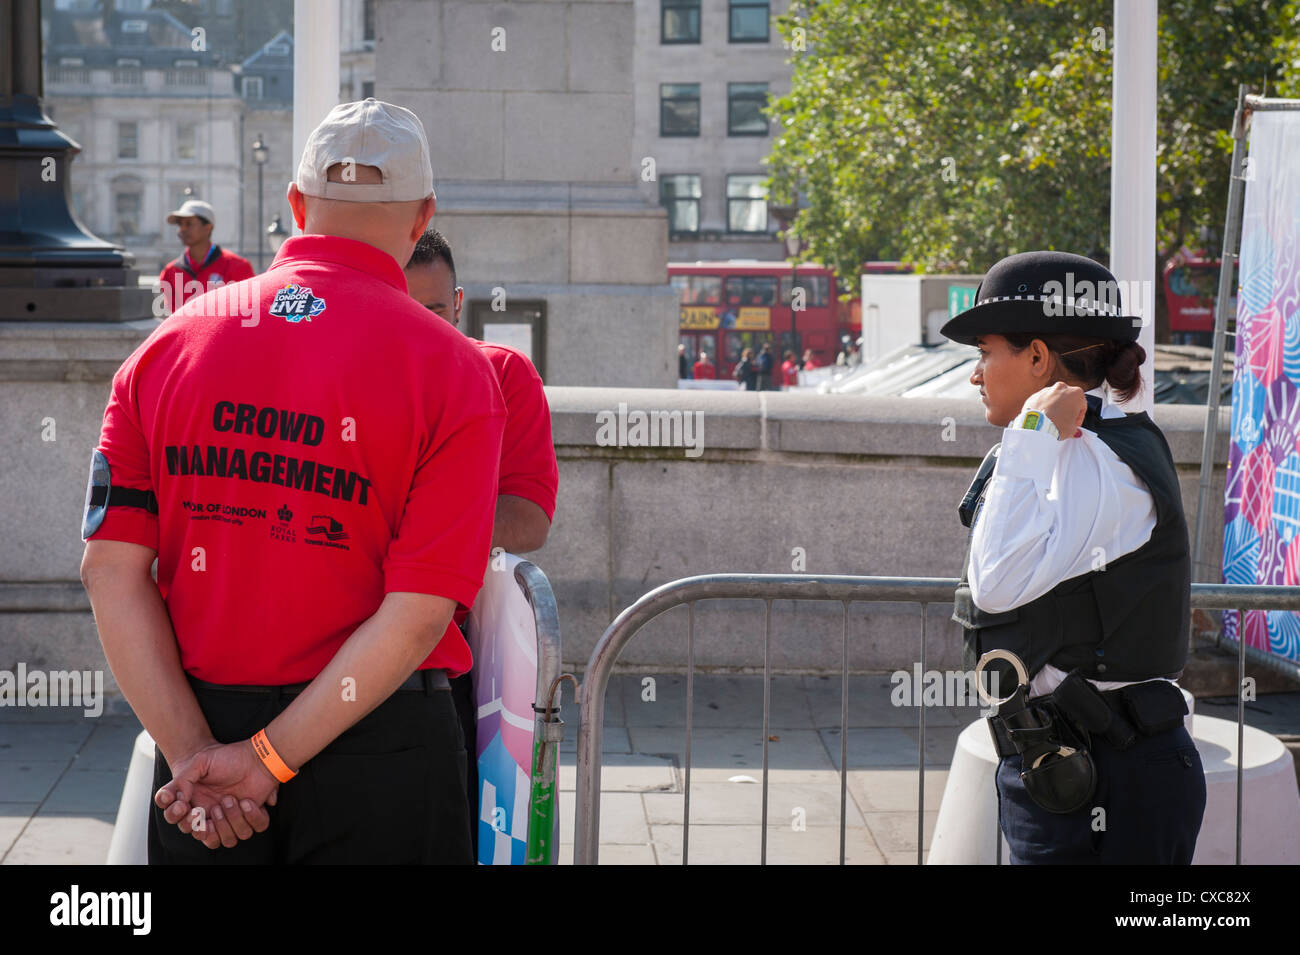 London Trafalgar Square 2012 Paralympics screen area crowd management steward & Metropolitan Police policewoman handcuffs by barriers Stock Photo